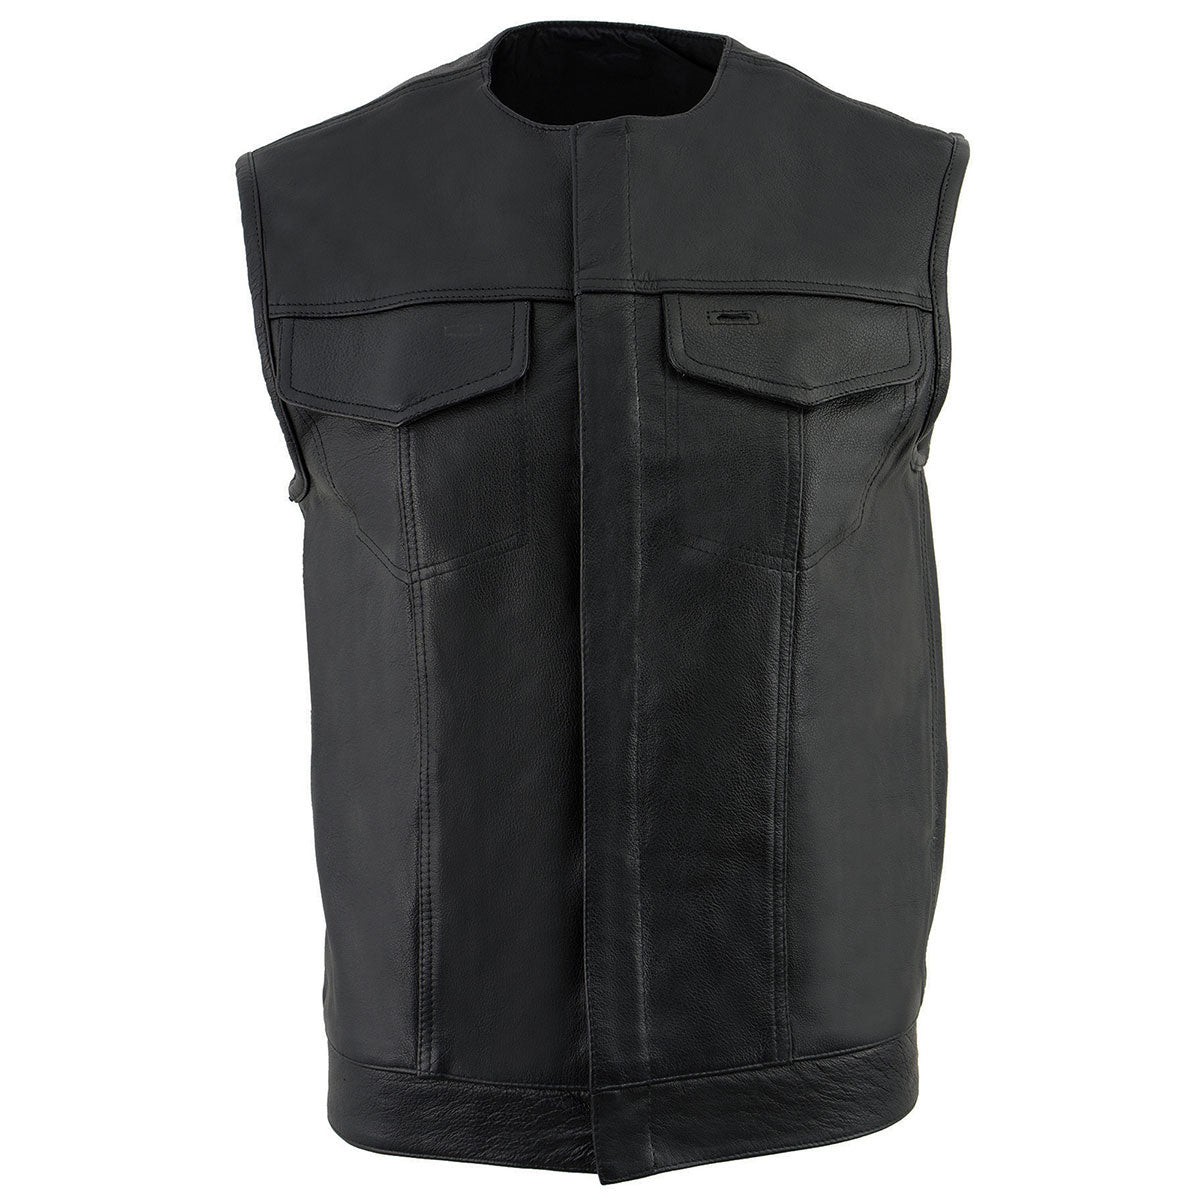 Z1R3721 Men’s ’338’ Black Collarless Motorcycle Leather Vest